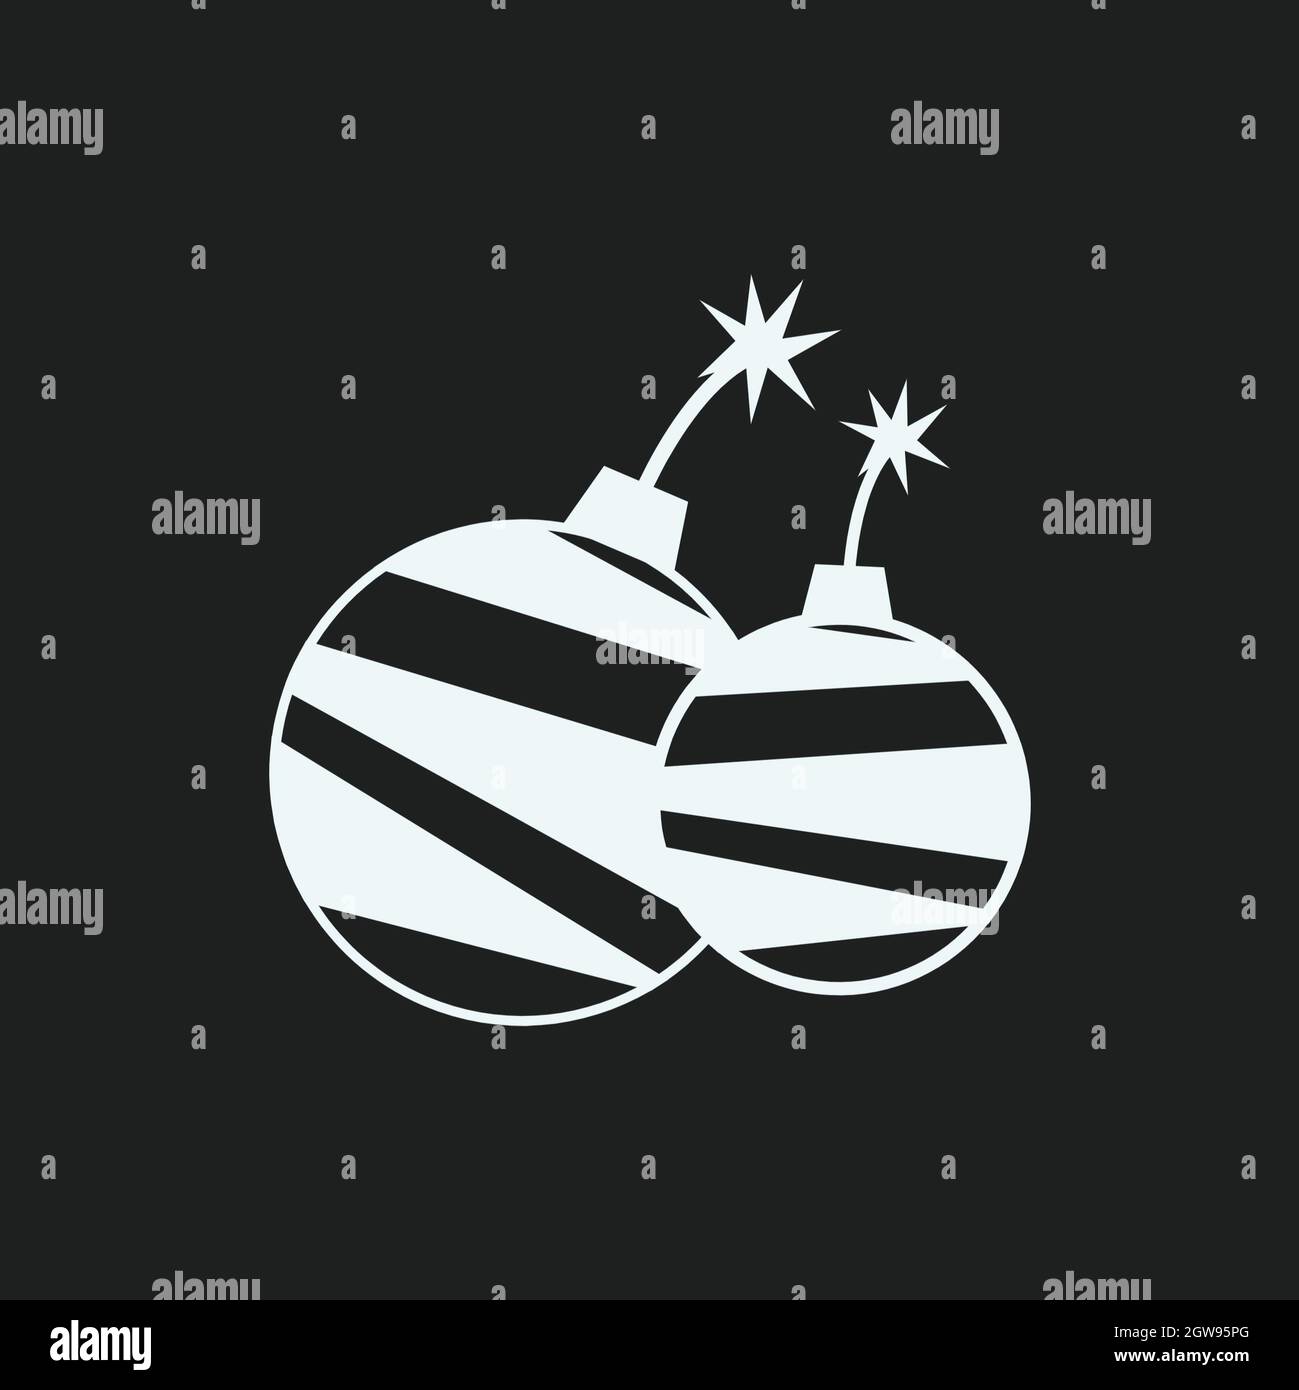 Bomb icon,vector illustration. Flat design style. vector bomb icon illustration isolated on Black background. Stock Photo